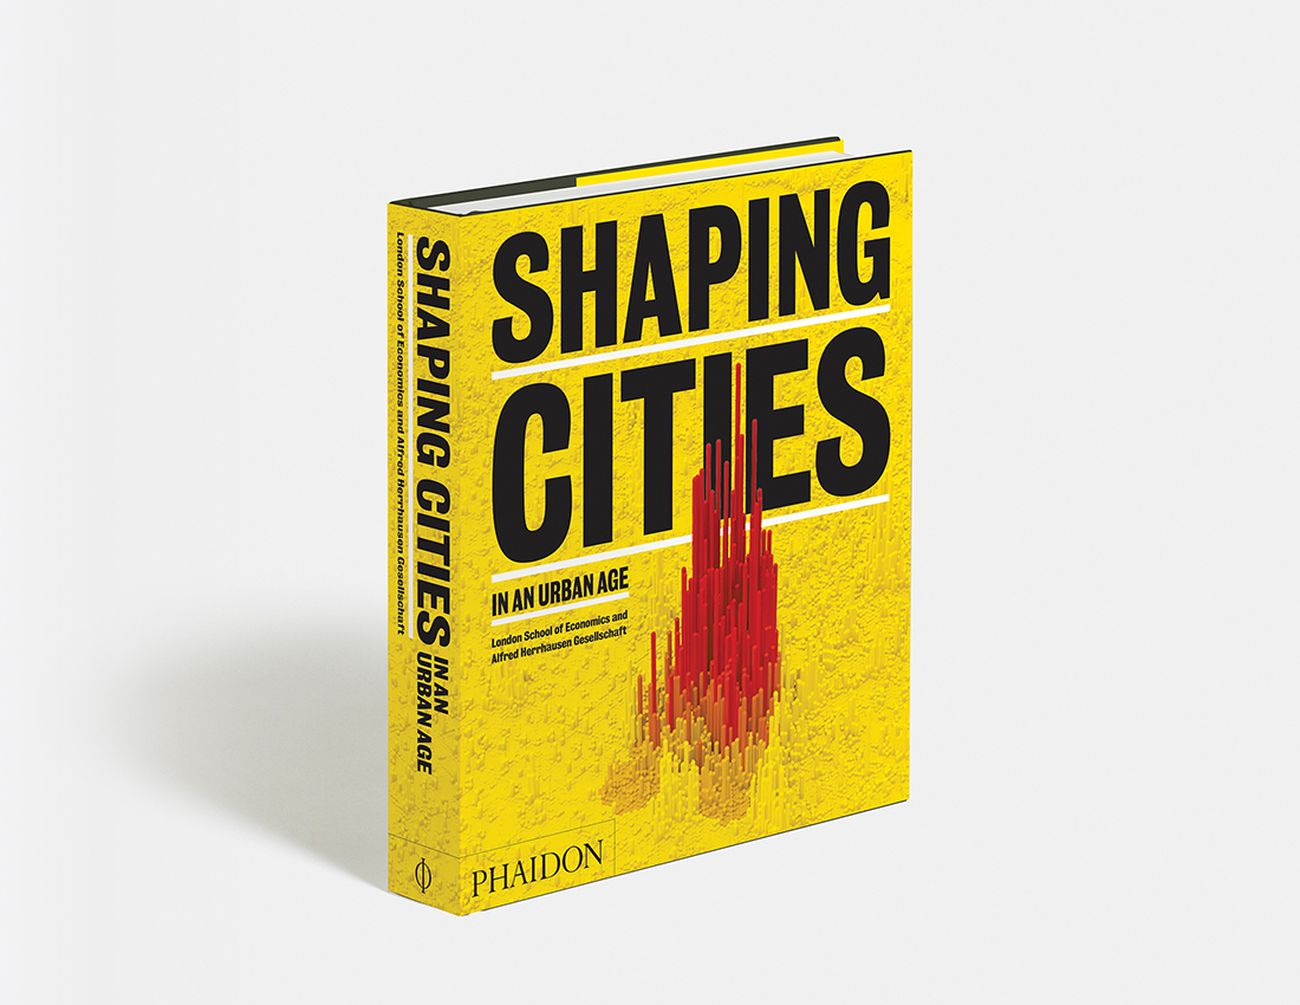 Ricky Burdett & Philipp Rode ‒ Shaping Cities in an Urban Age (Phaidon, Londra 2018)